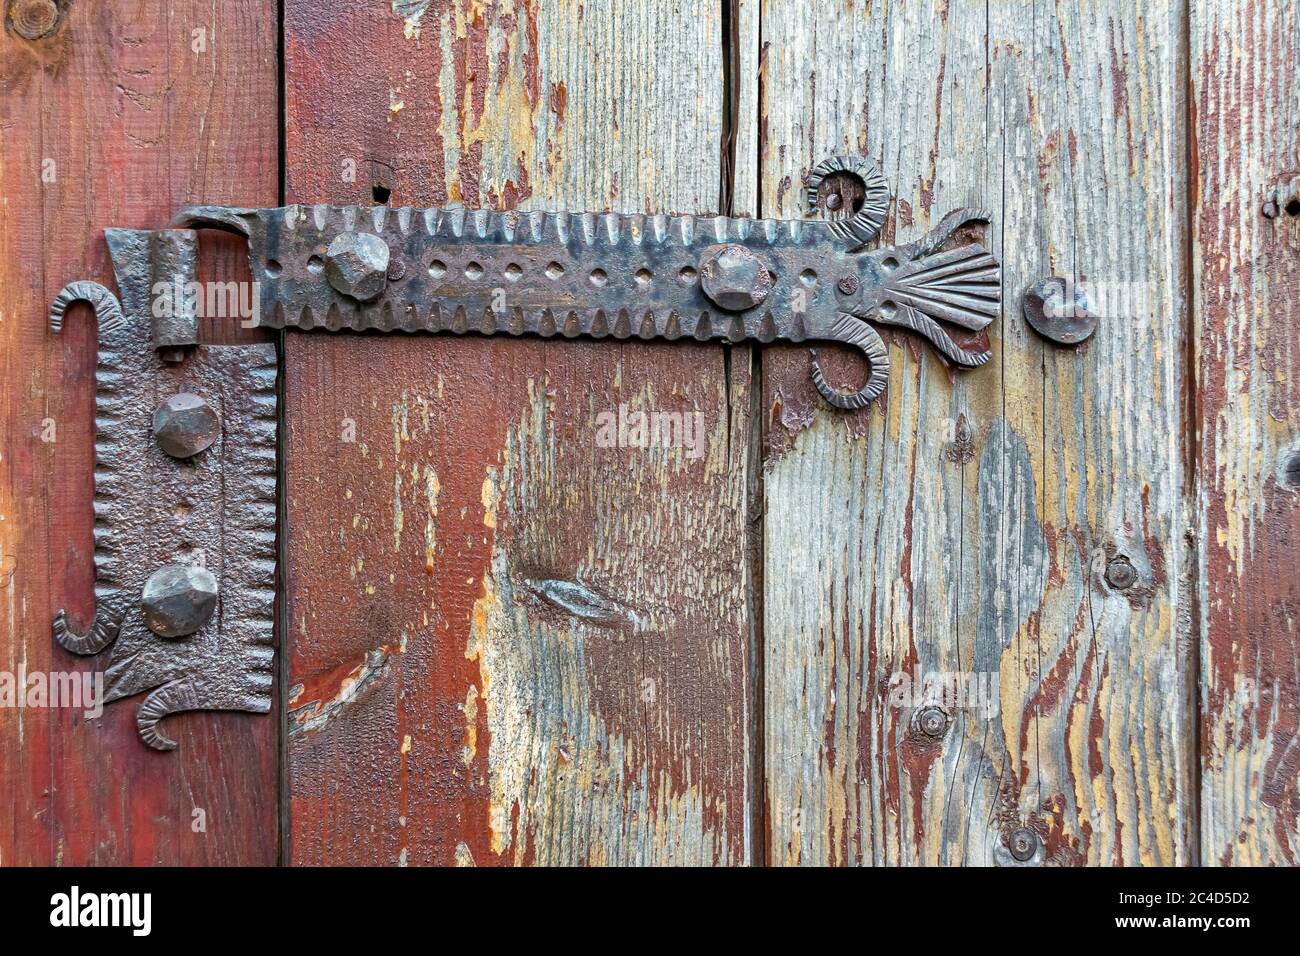 Old rusty door hinge on wooden planks, decoration detail Stock Photo